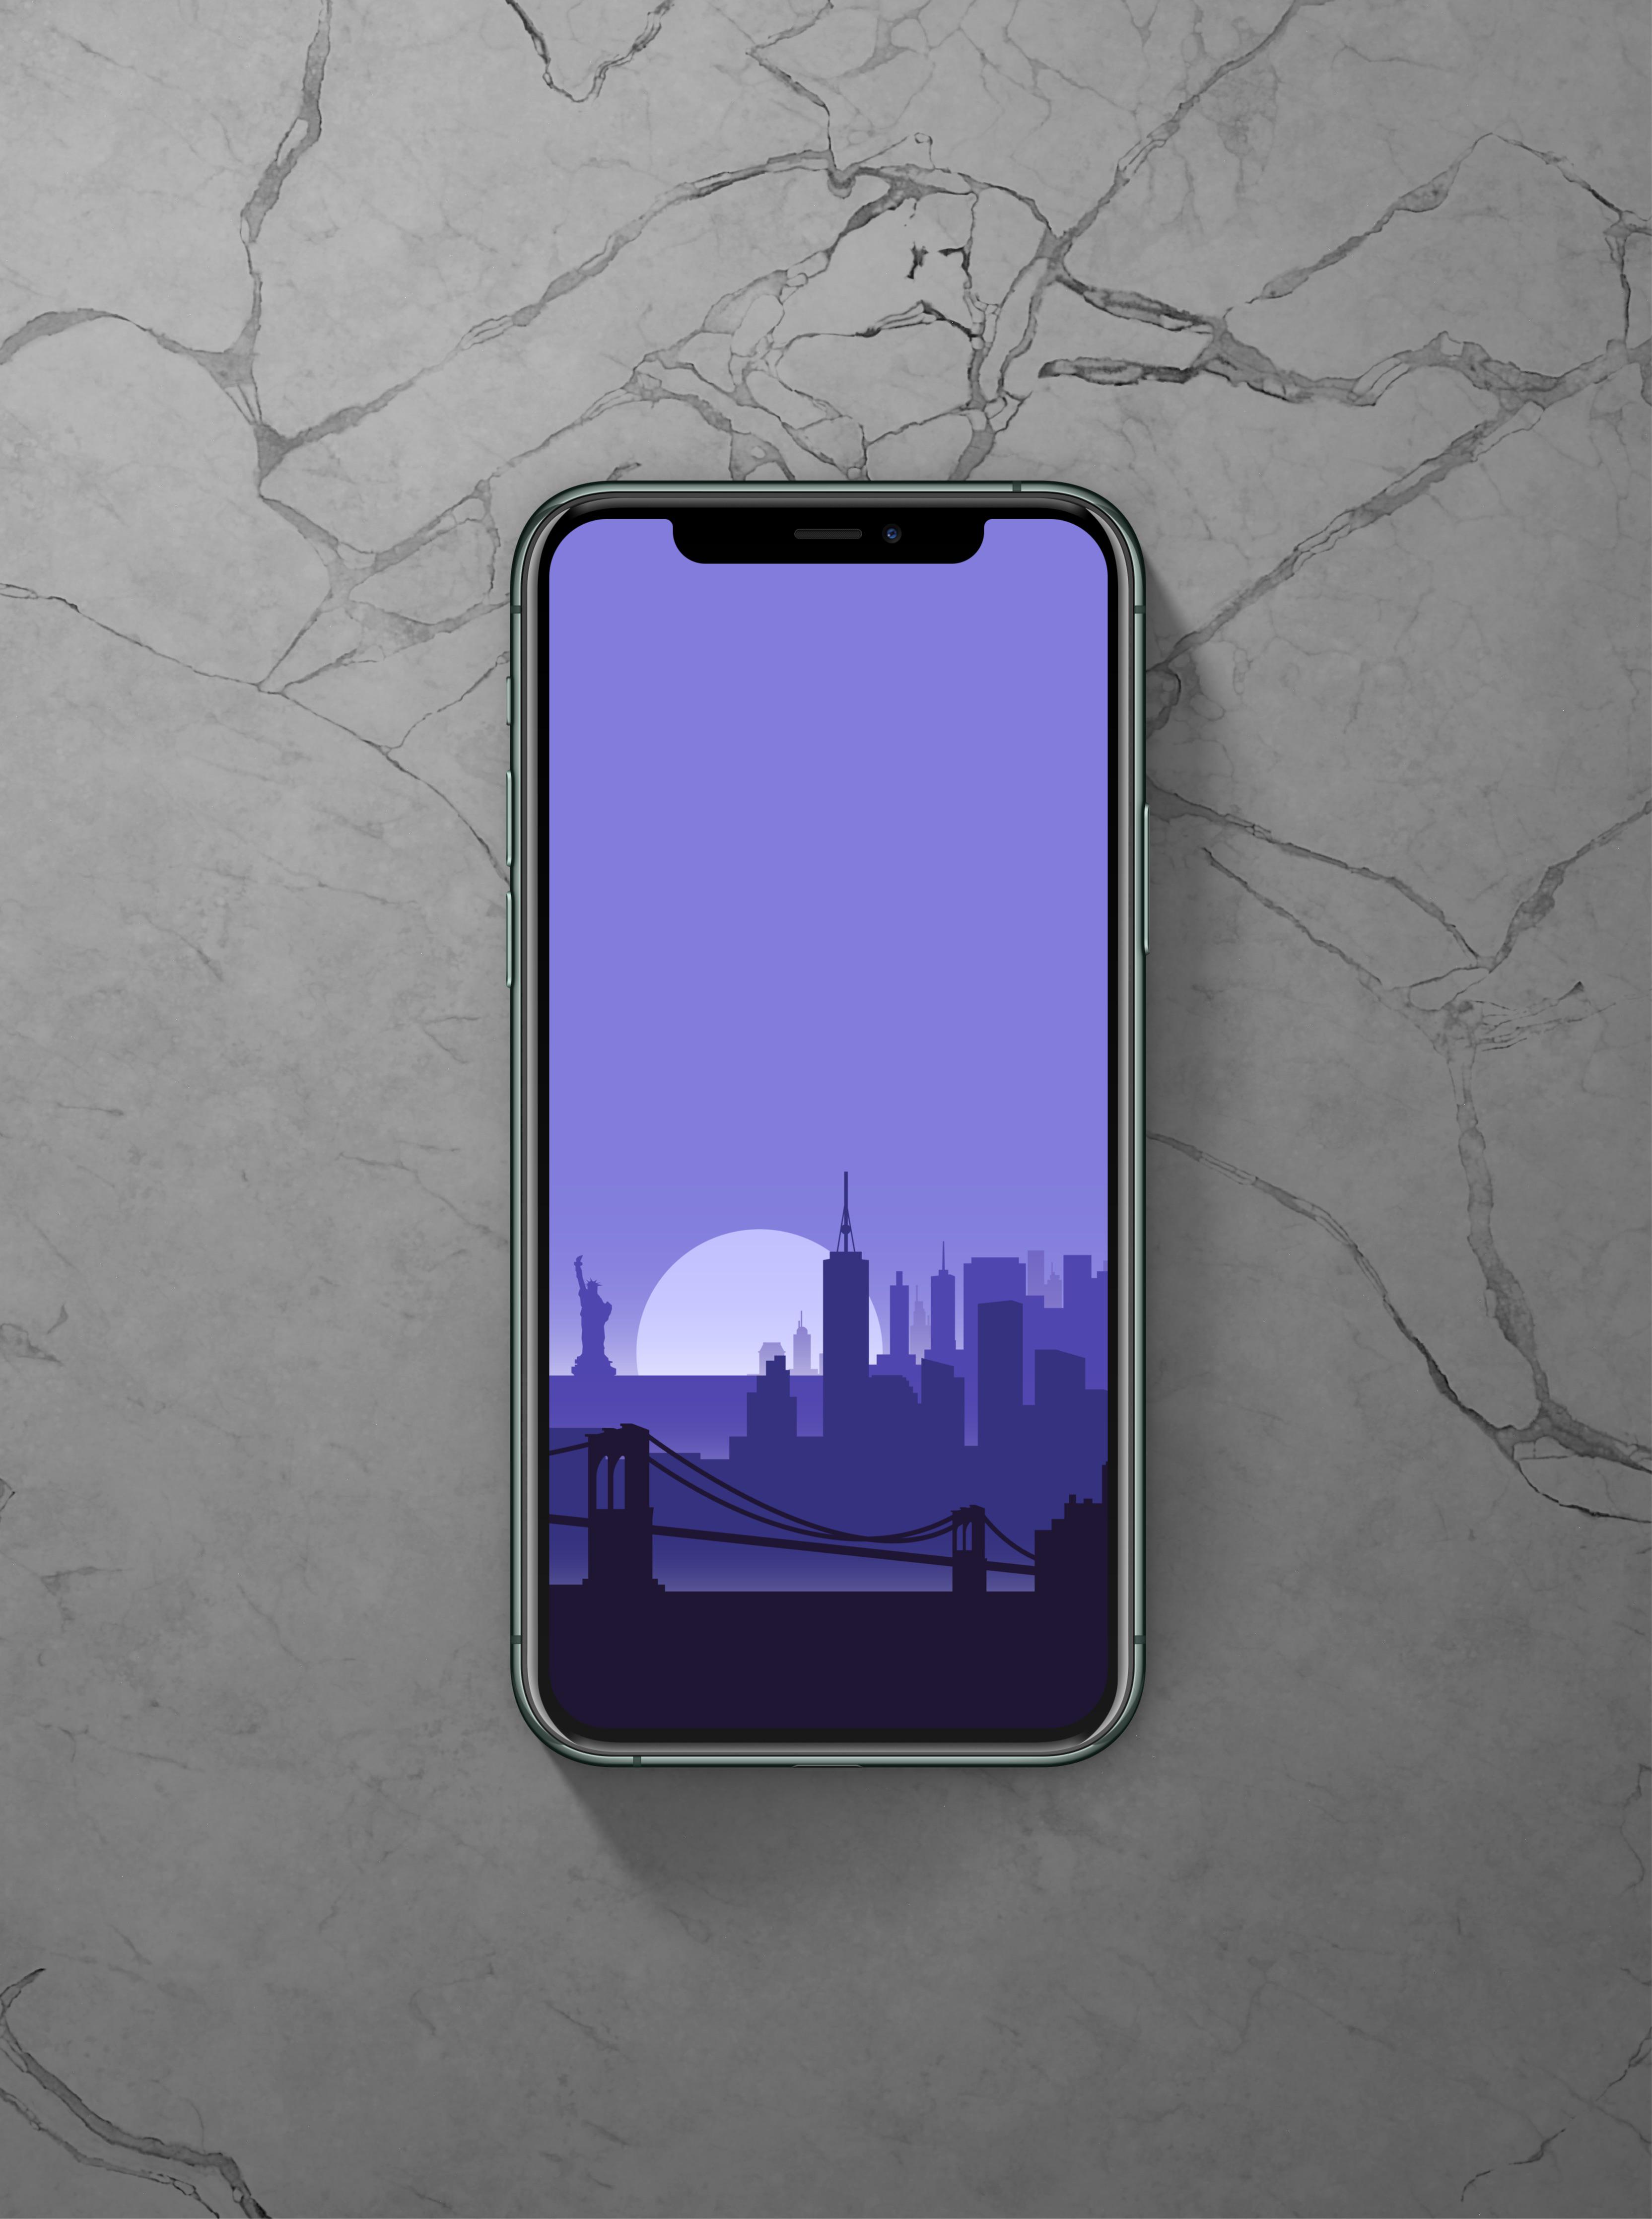 Free Vector  Gradient blur pink purple phone wallpaper vector